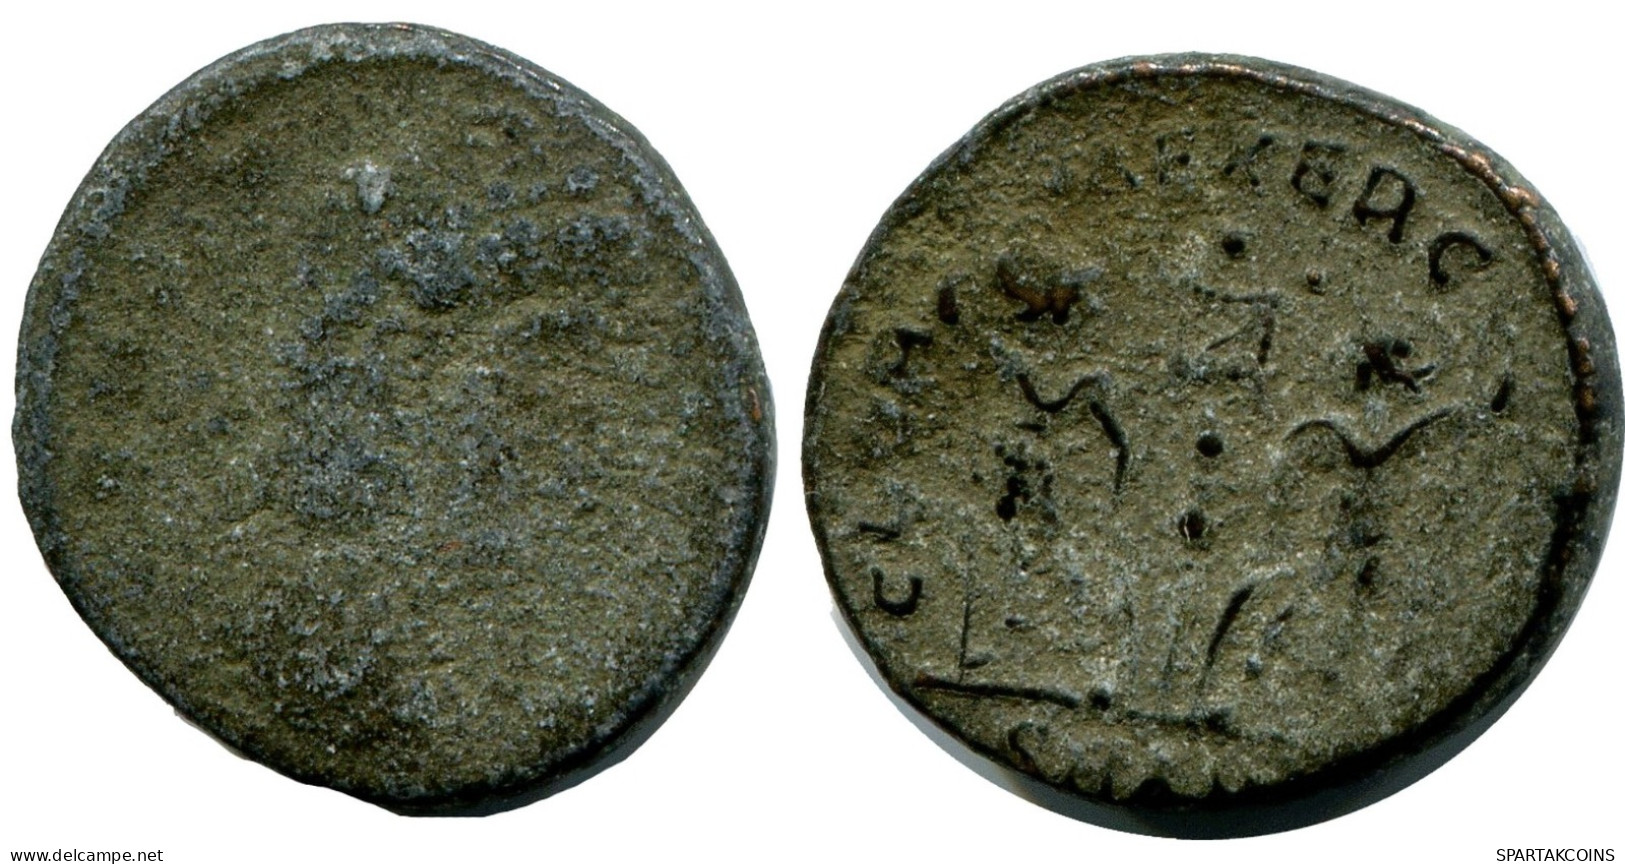 ROMAN Pièce MINTED IN ALEKSANDRIA FOUND IN IHNASYAH HOARD EGYPT #ANC10150.14.F.A - L'Empire Chrétien (307 à 363)